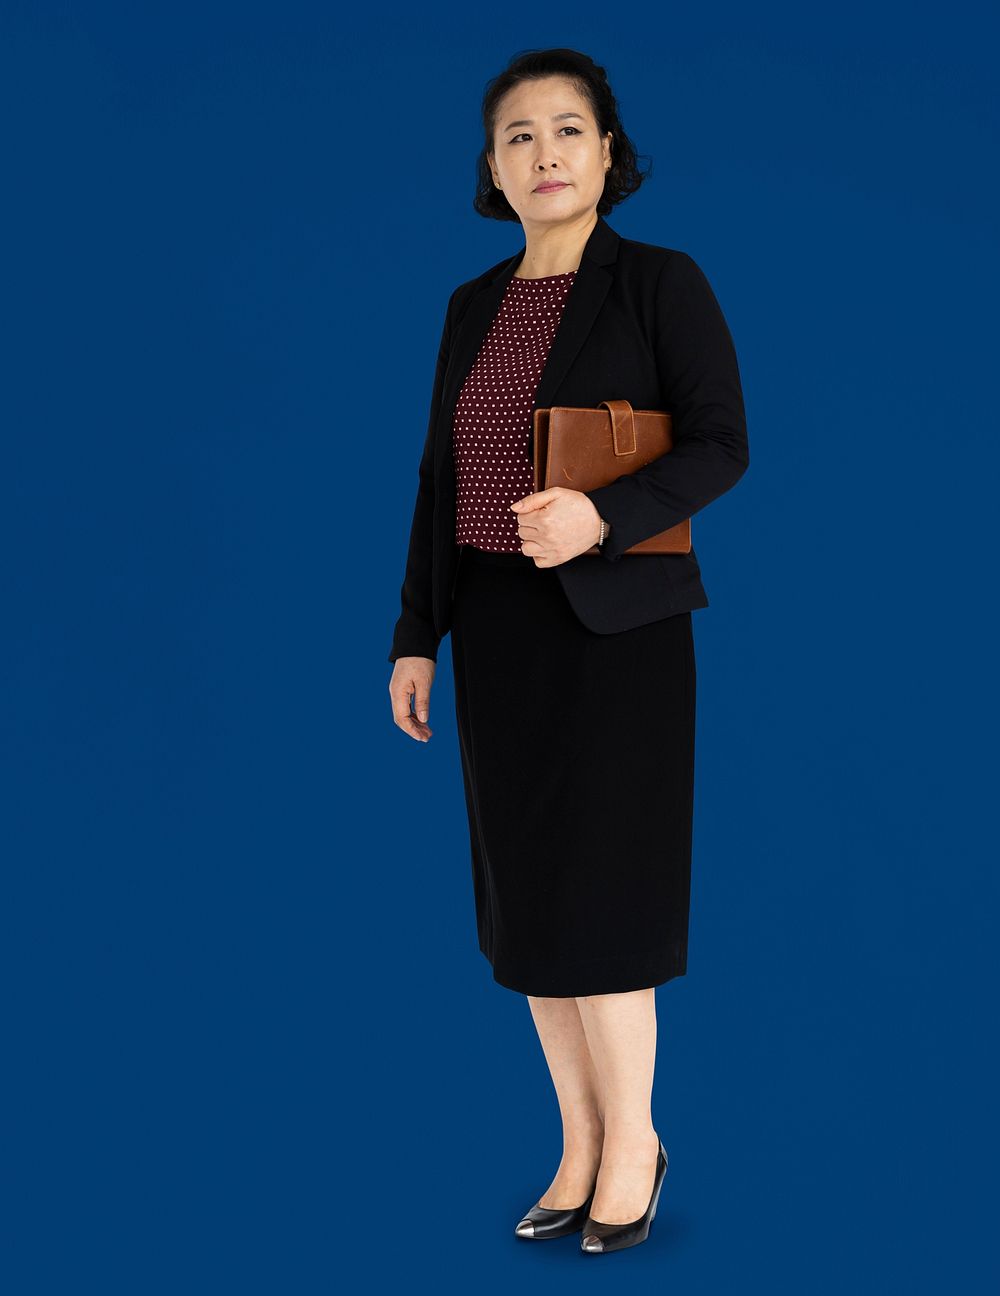 Asian Lady Posture Professional | Premium Photo - rawpixel